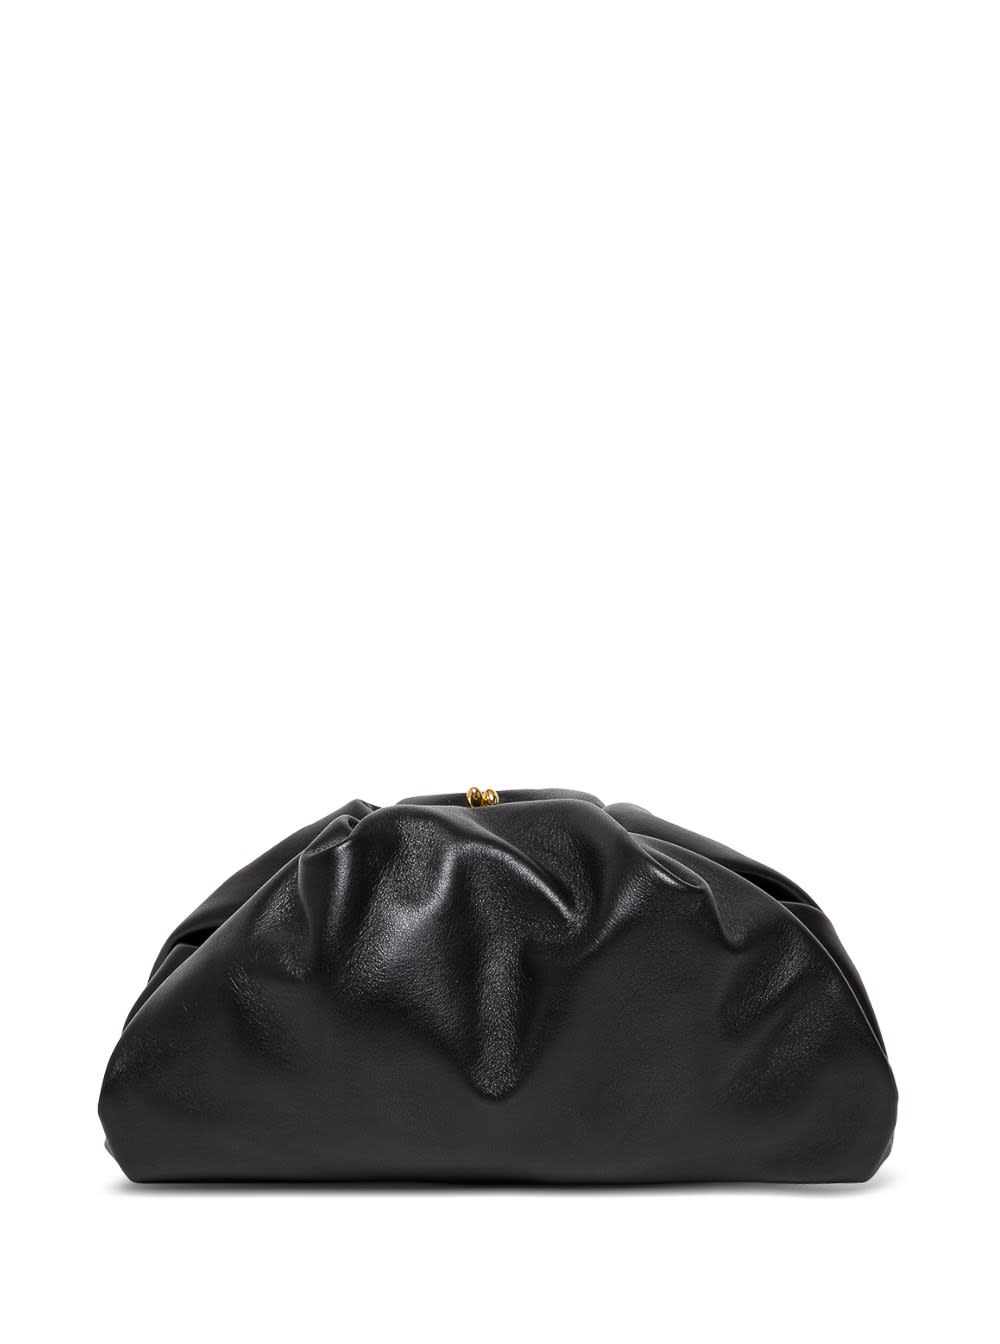 Jil Sander Handbag In Black Leather